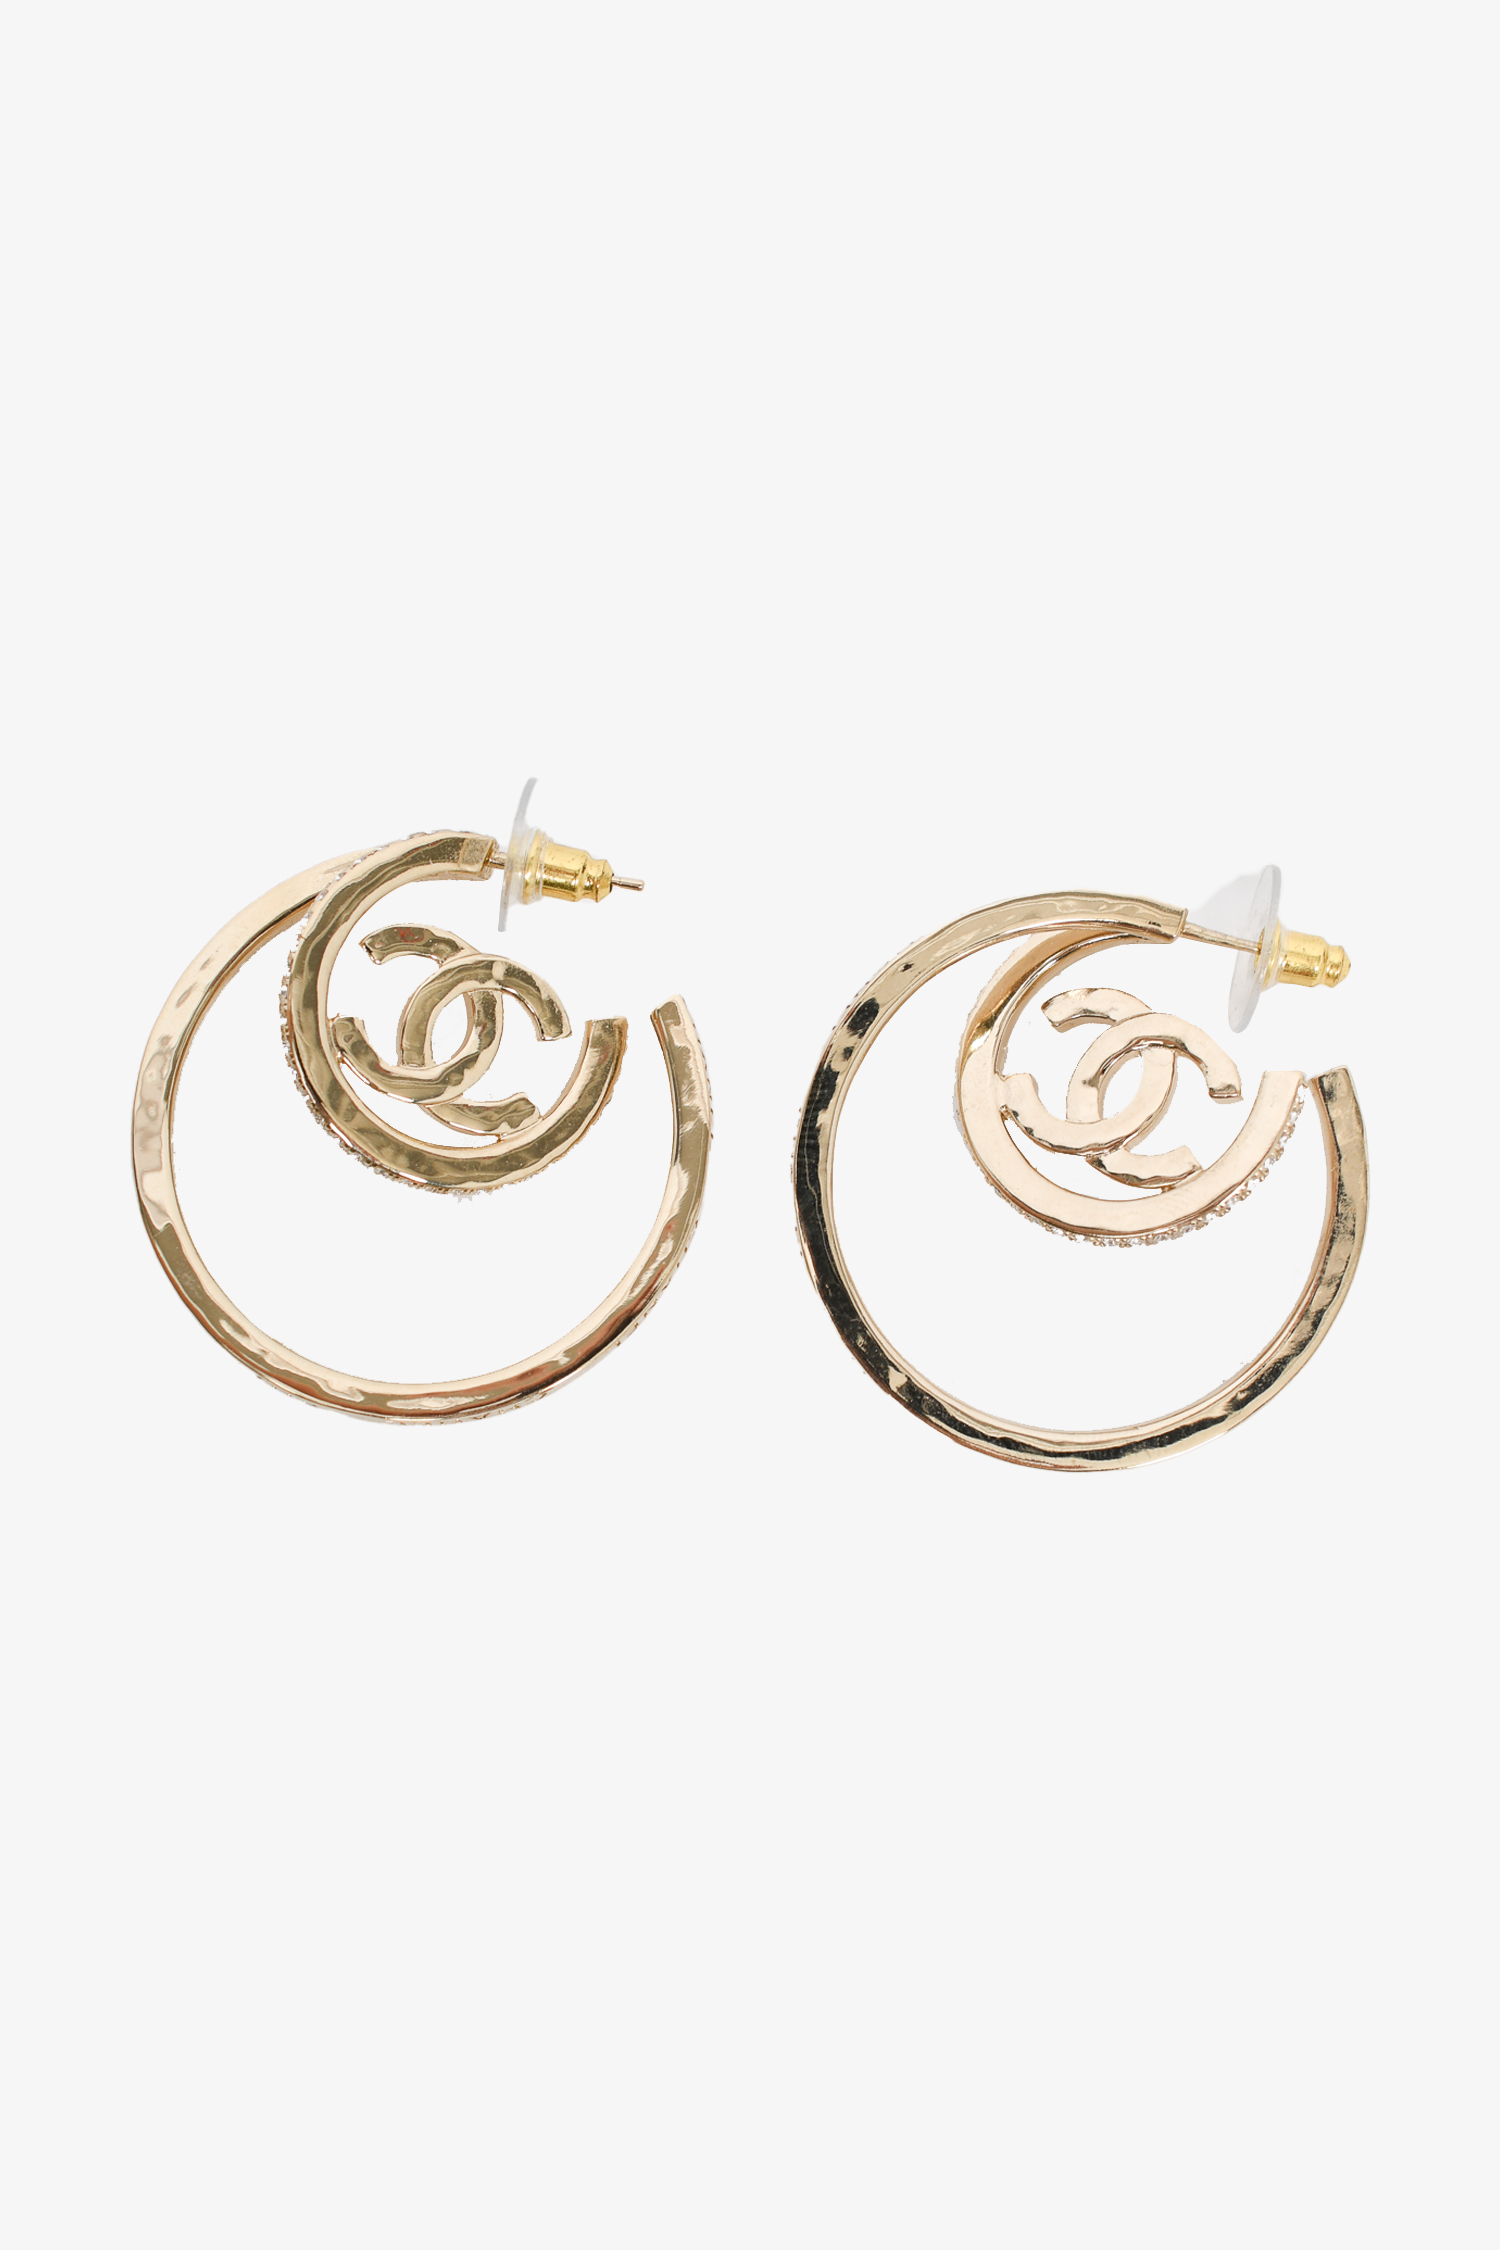 Chanel Bag Earring - 13 For Sale on 1stDibs